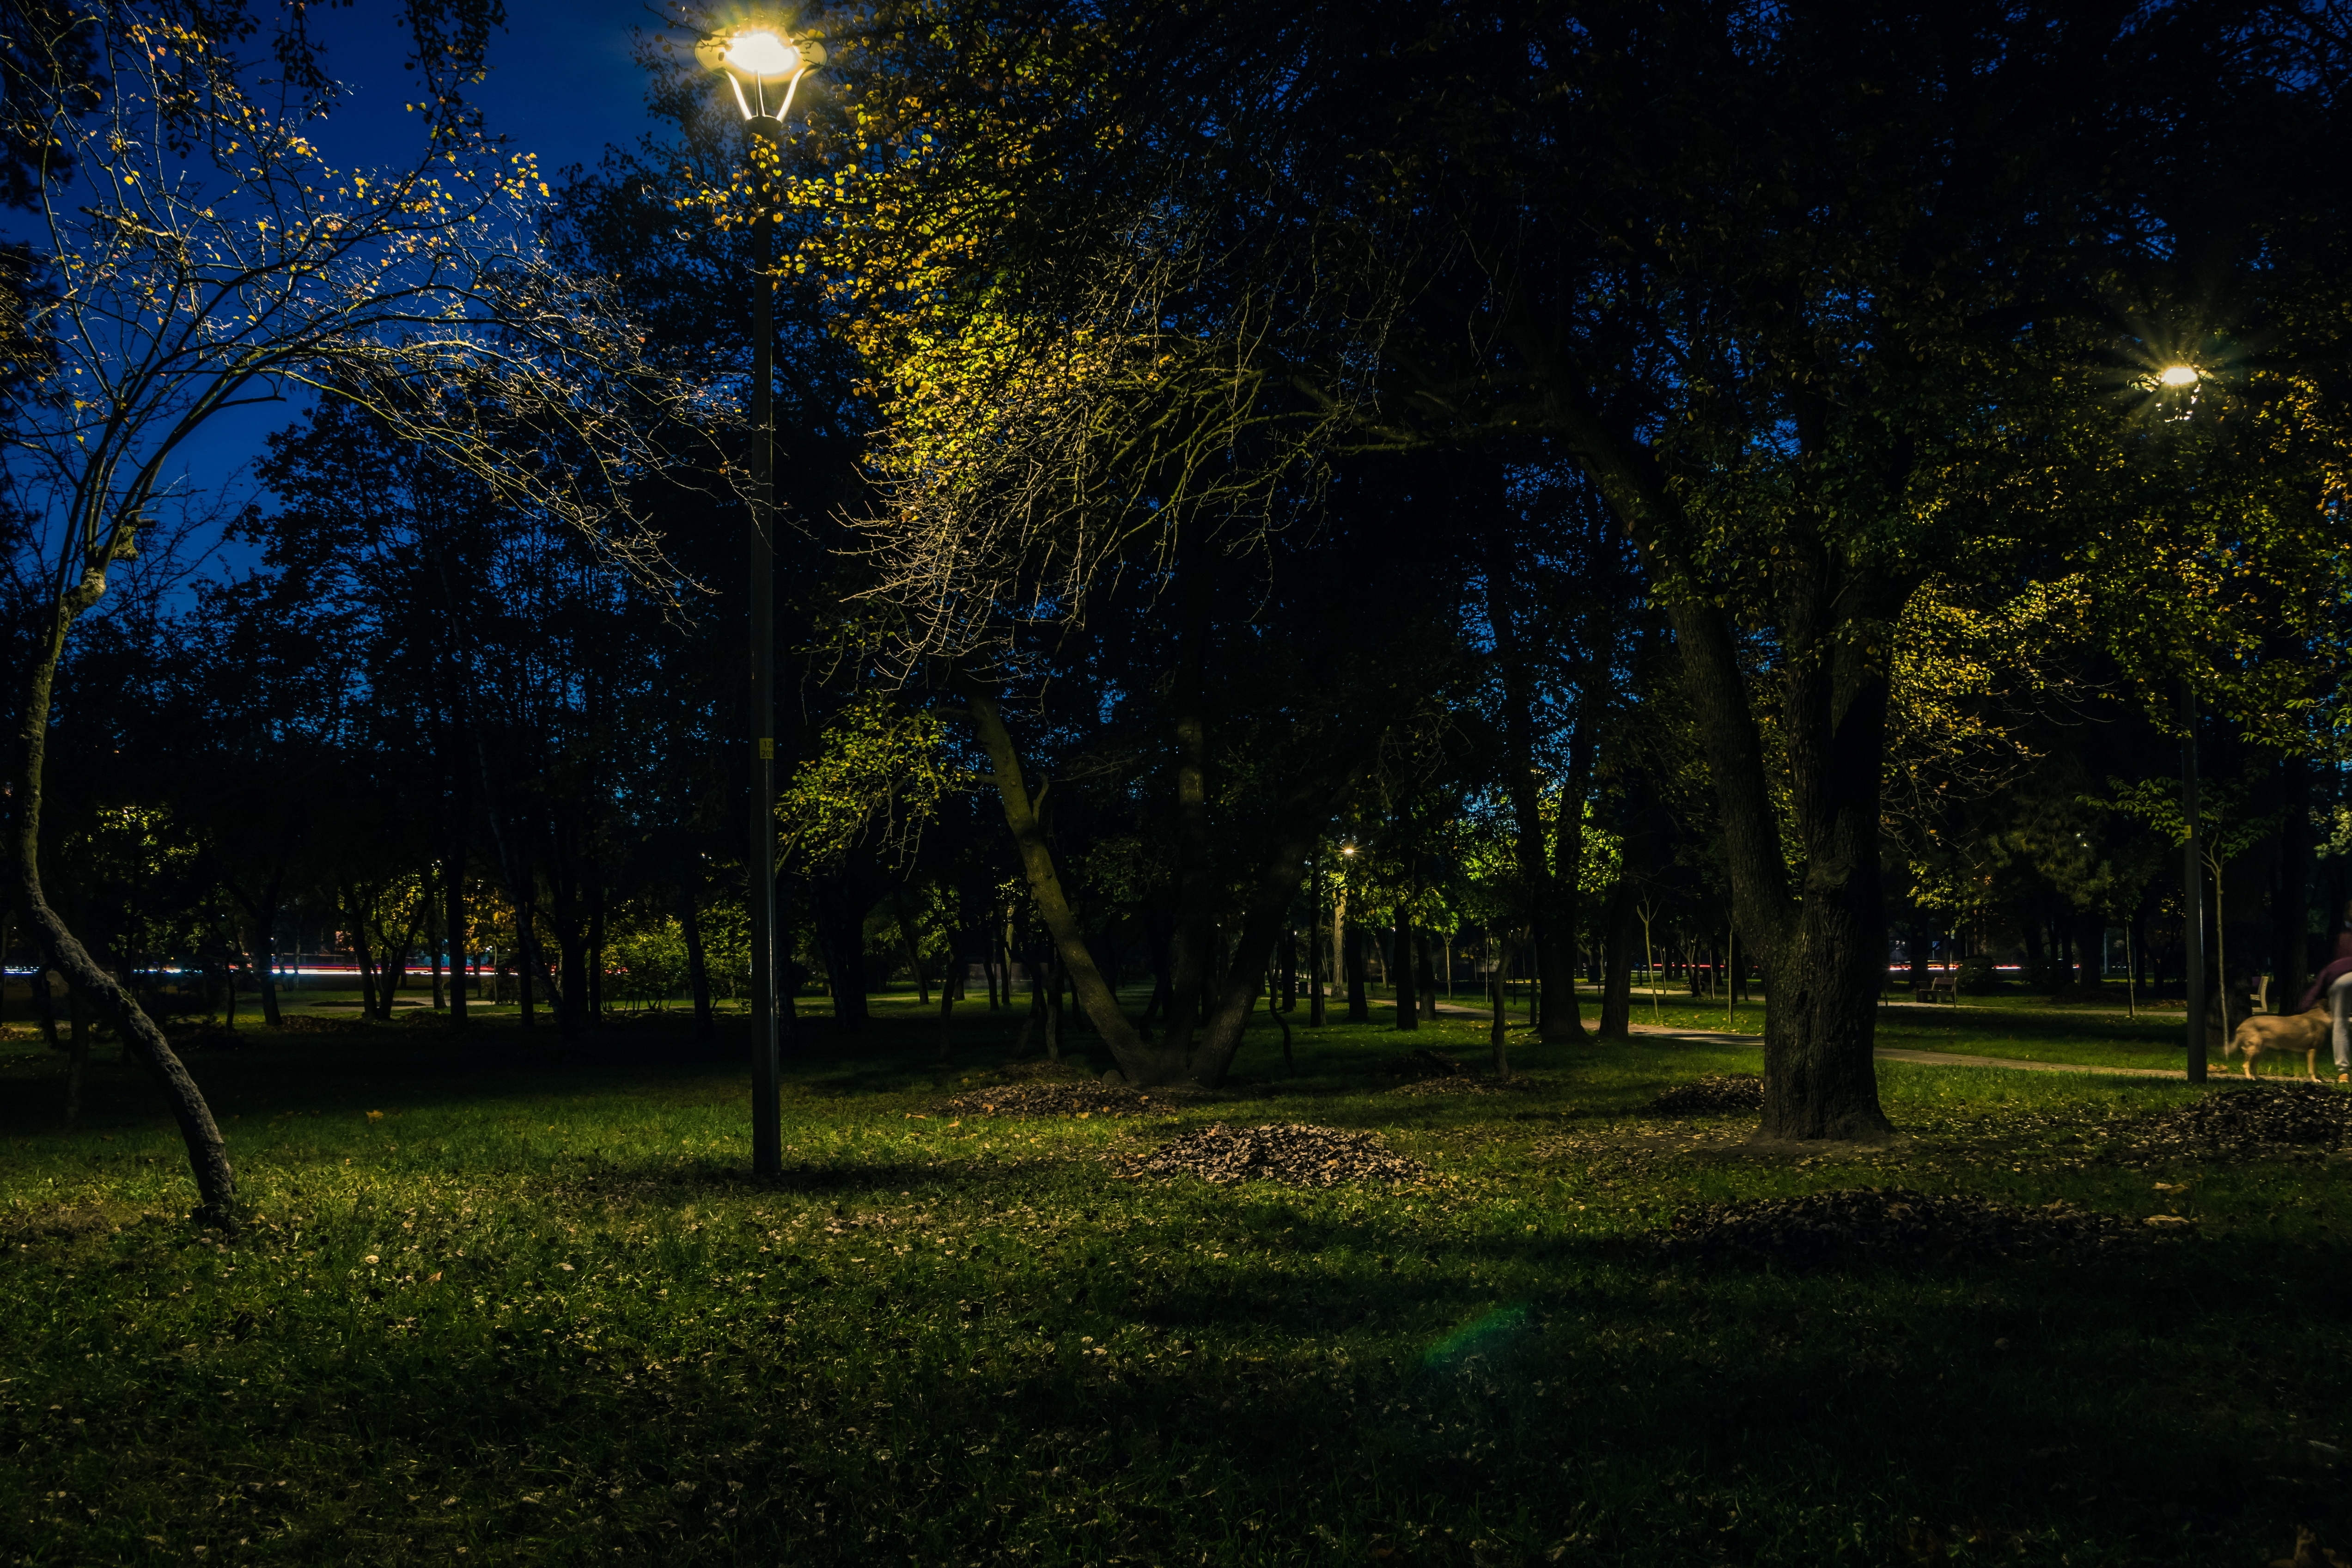 Park at night | Source: Shutterstock.com